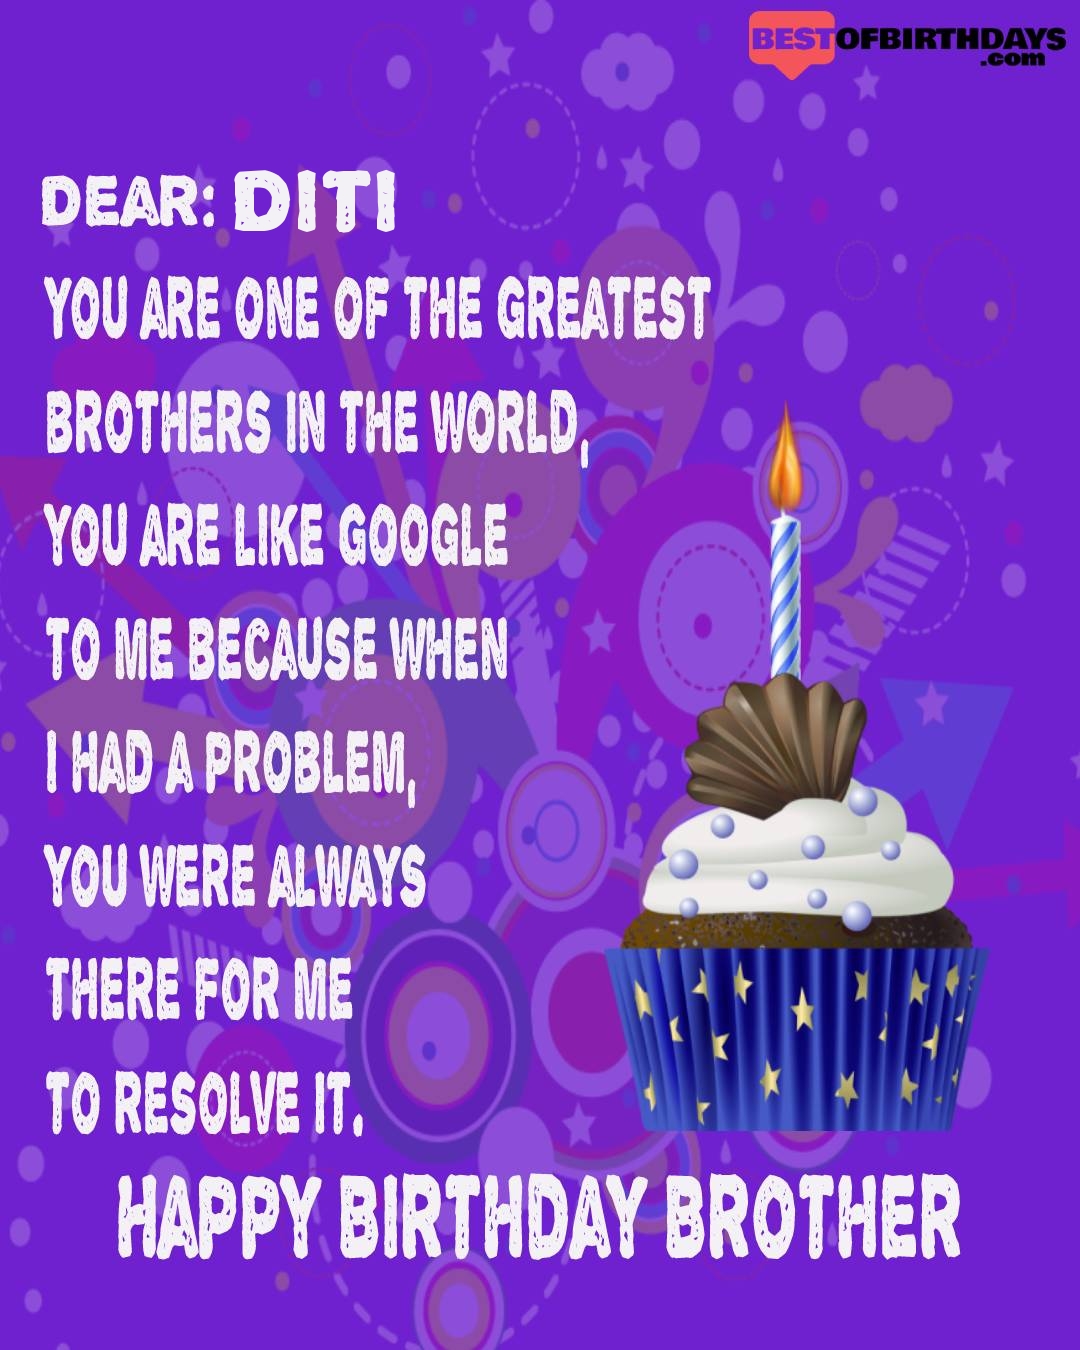 Happy birthday diti bhai brother bro